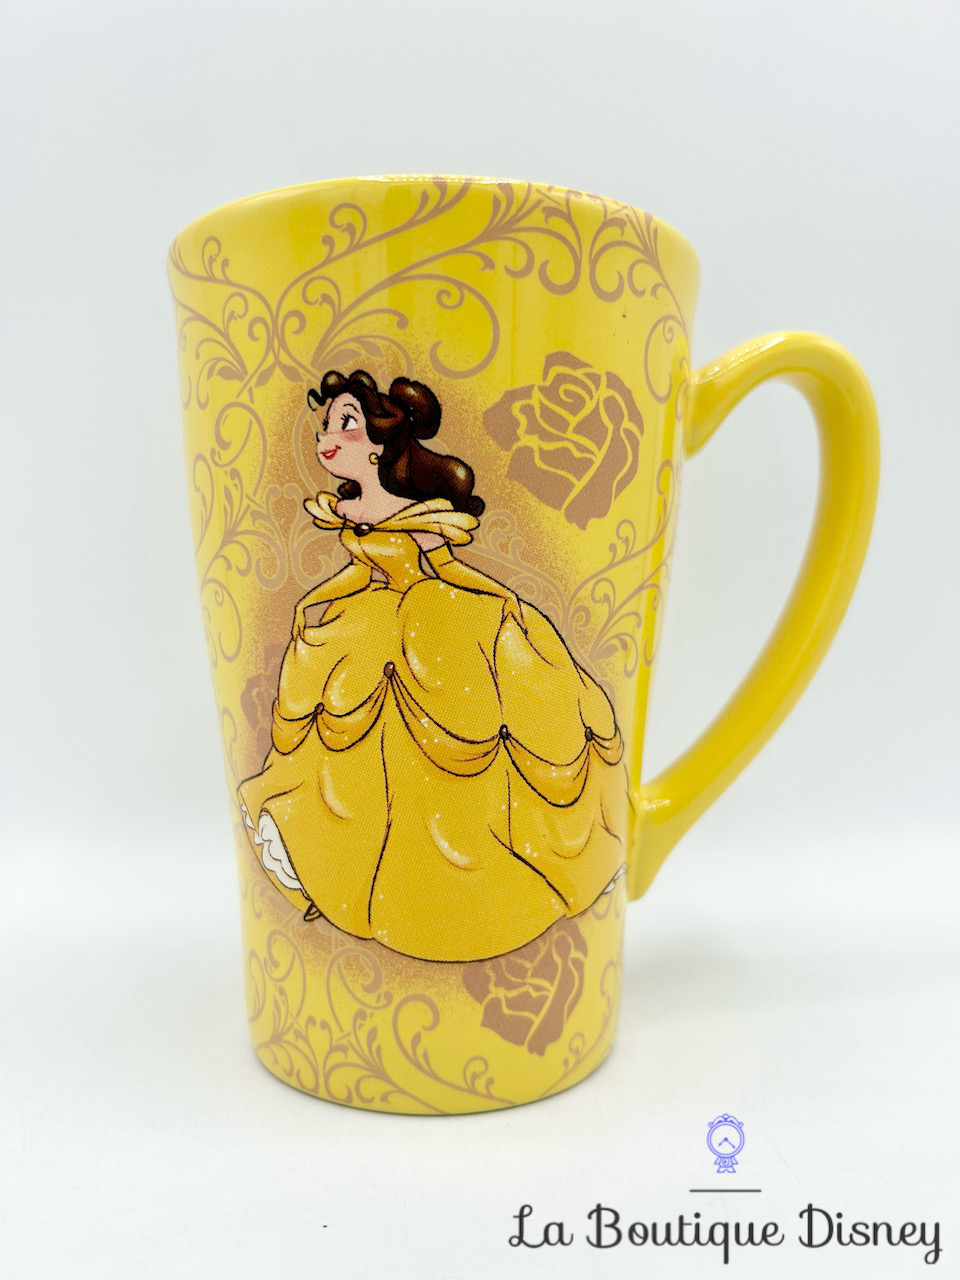 Tasse Belle La Belle et la Bête Disney Store mug jaune princesse